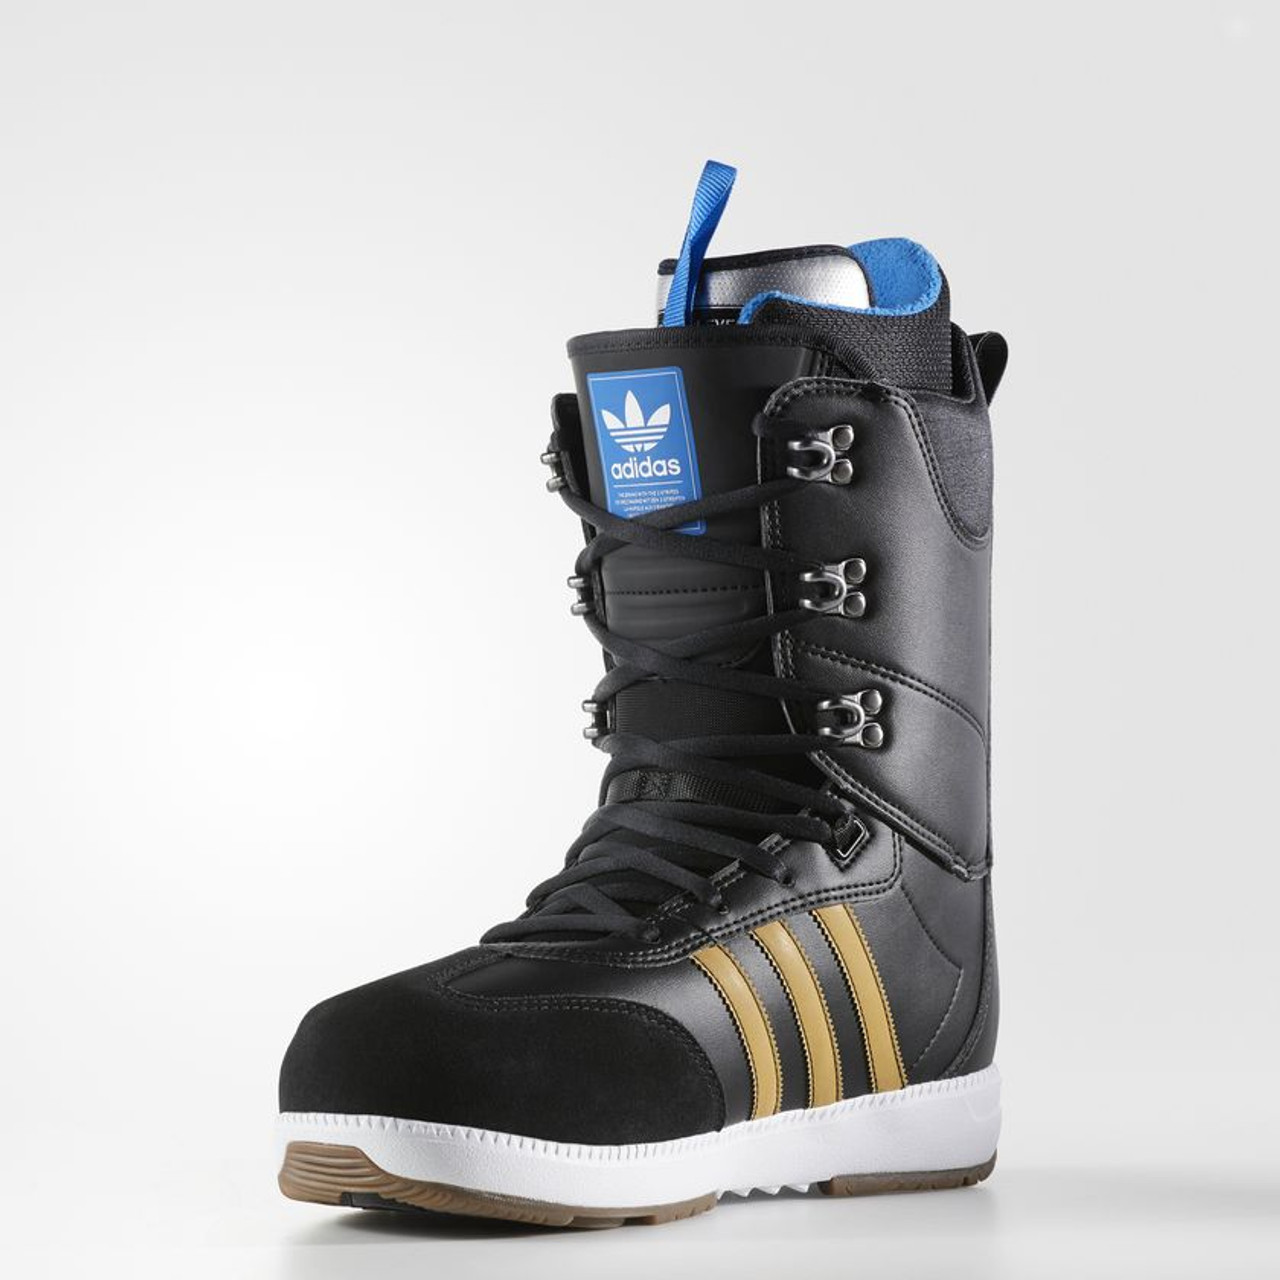 adidas samba snowboard boots 2019